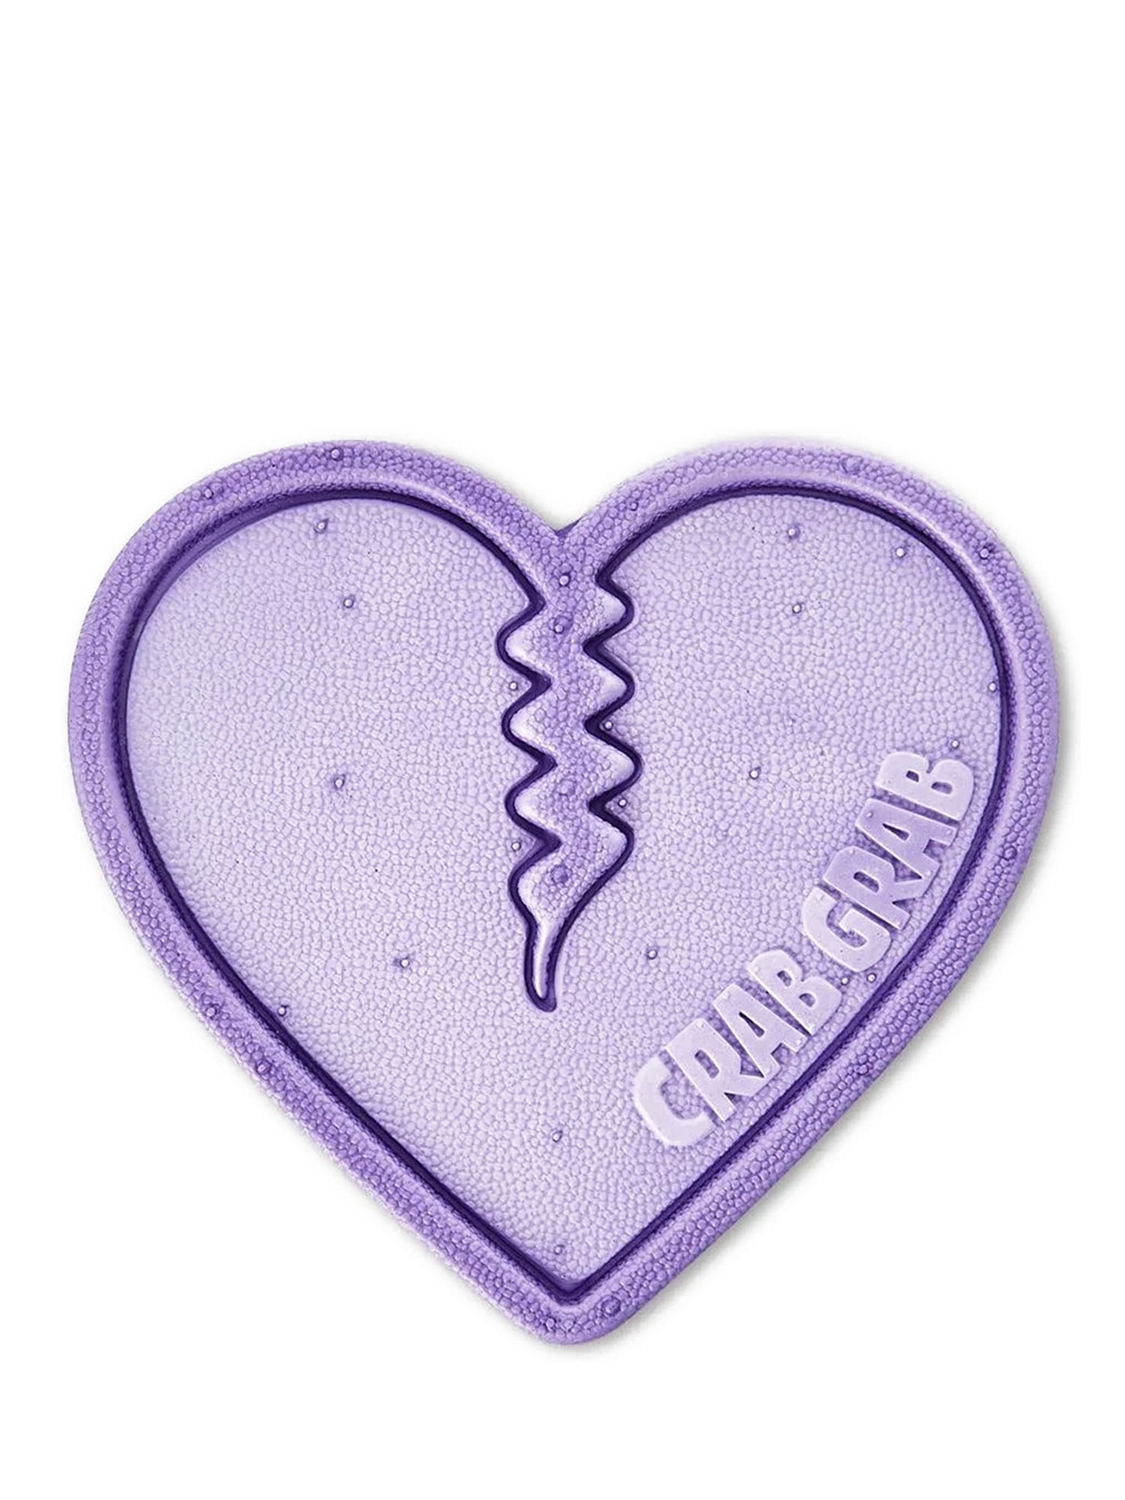 Наклейка на сноуборд CRABGRAB Mega Heart Lavender